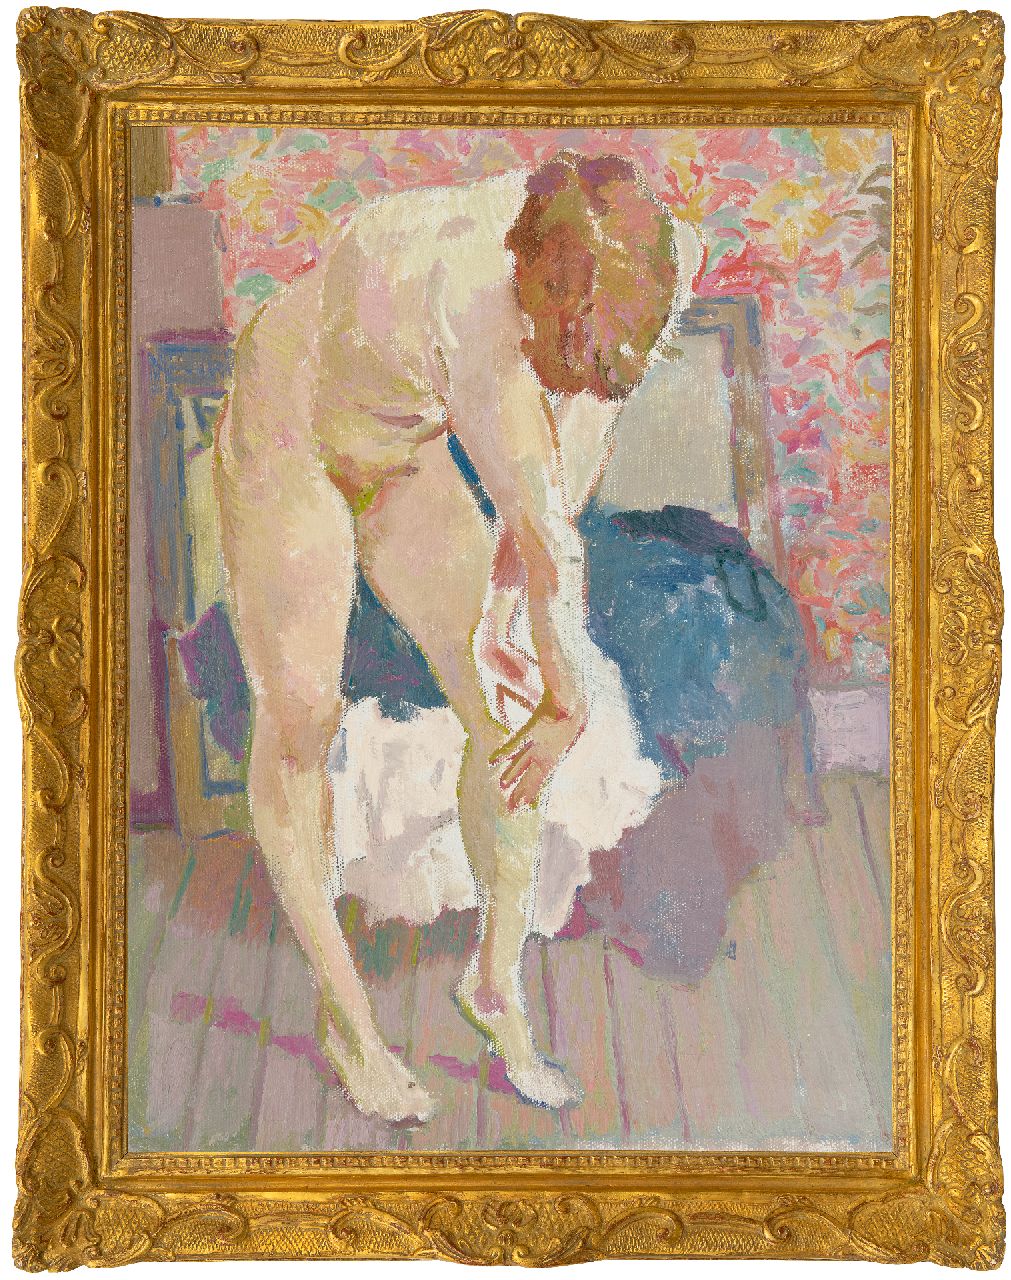 Boer H. de | Hessel de Boer | Paintings offered for sale | Bending nude, oil on canvas 60.3 x 45.0 cm